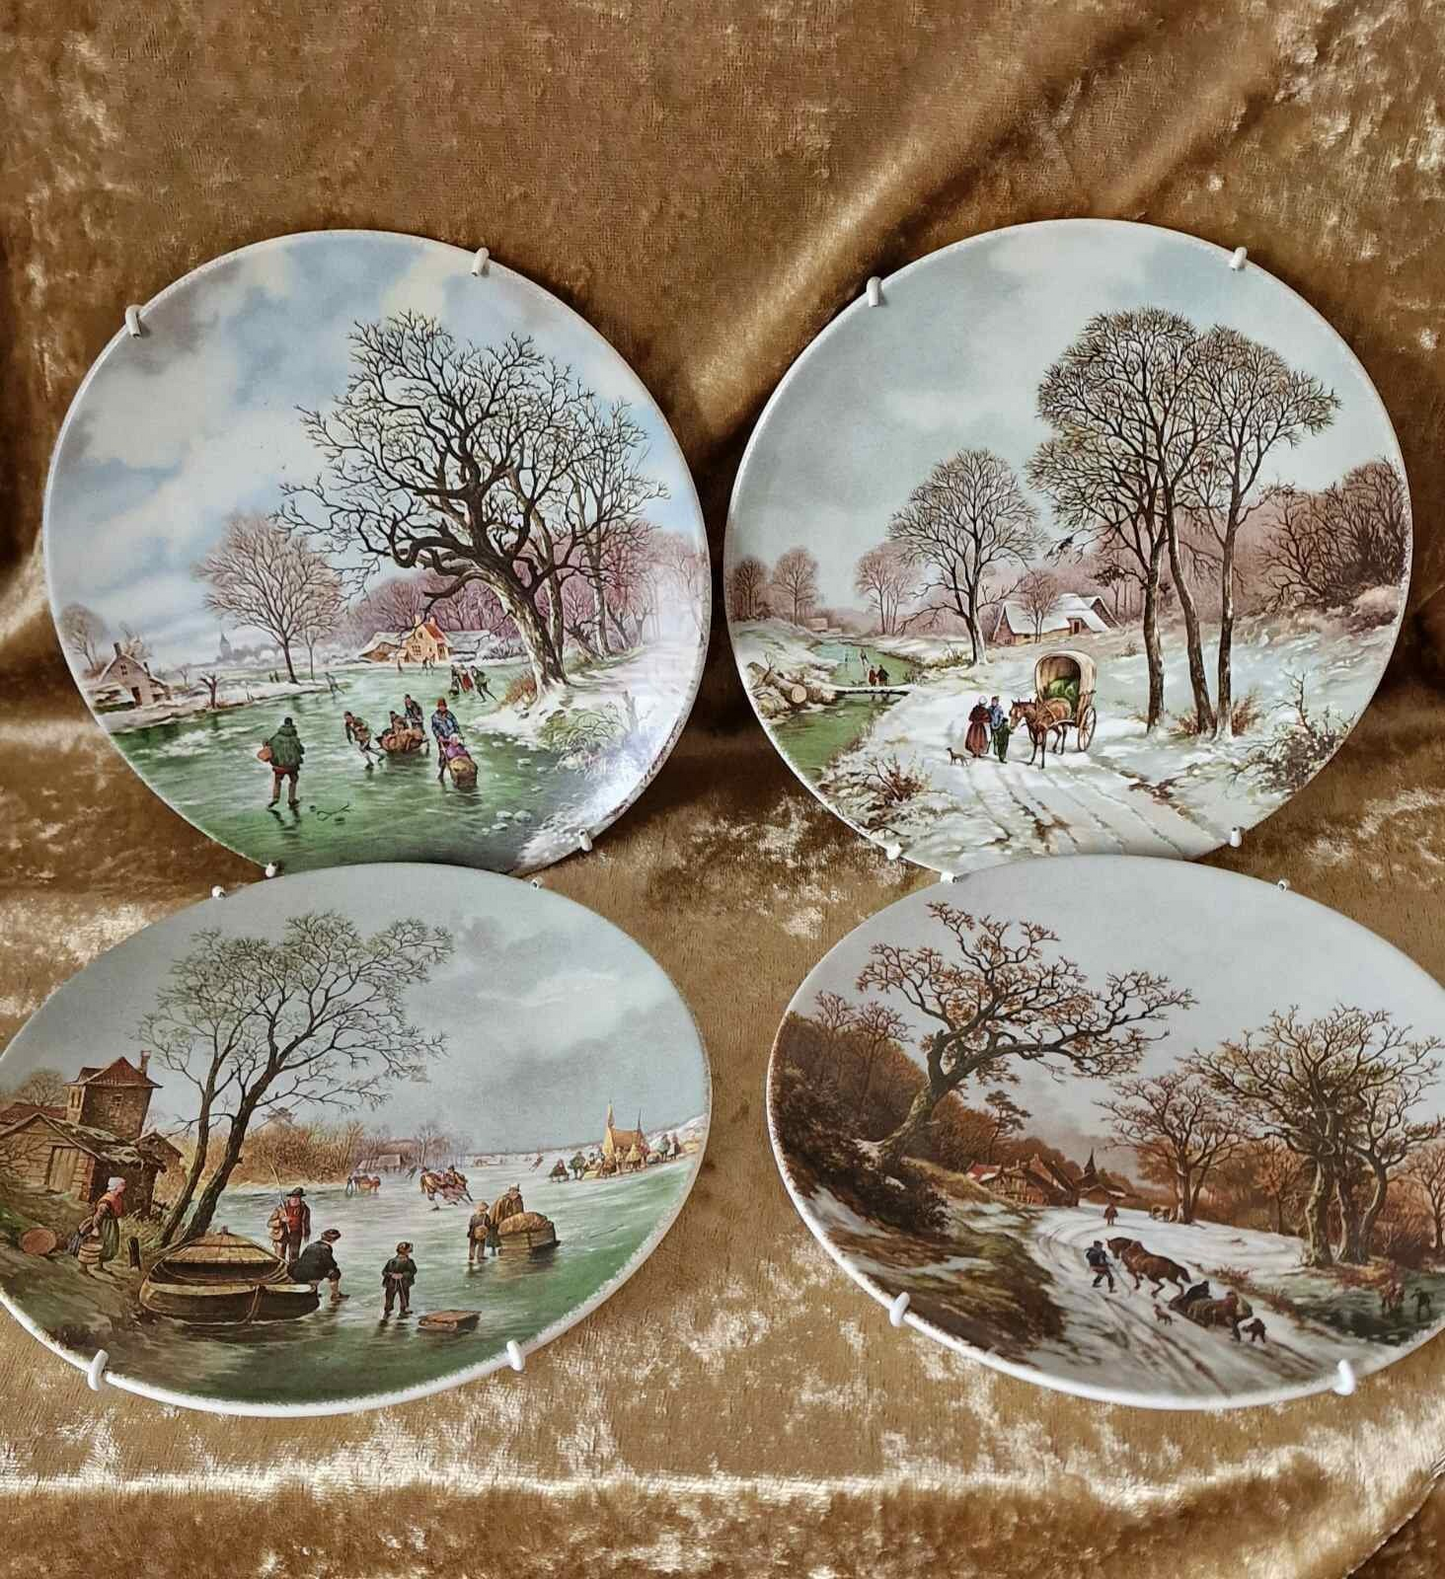 Poole "Landscape in Winter" display set